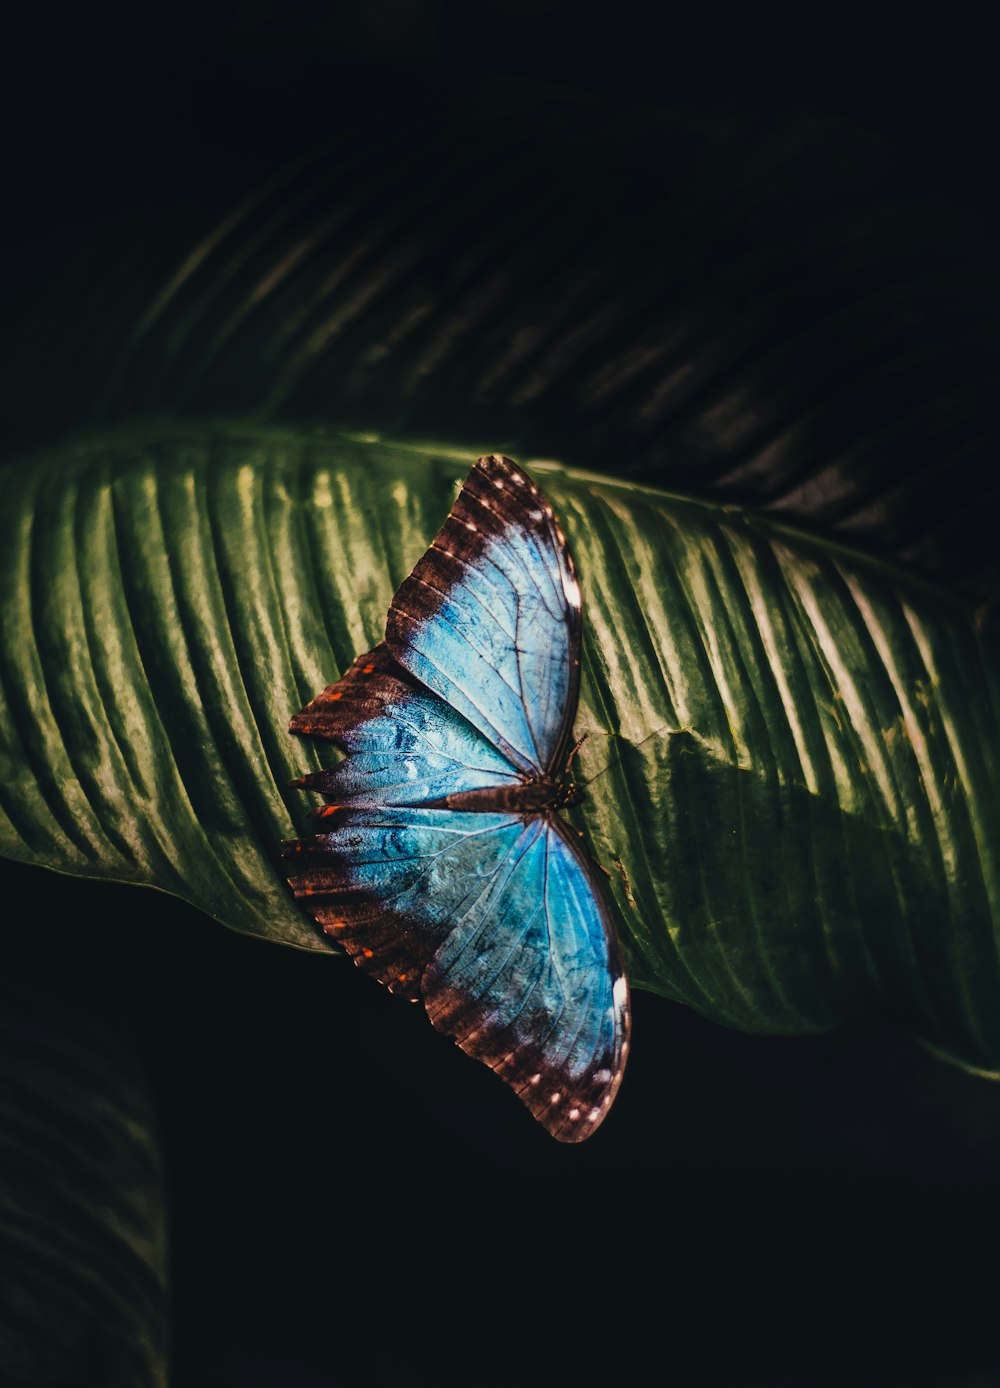 borboleta azul e marrom empoleirando-se na folha